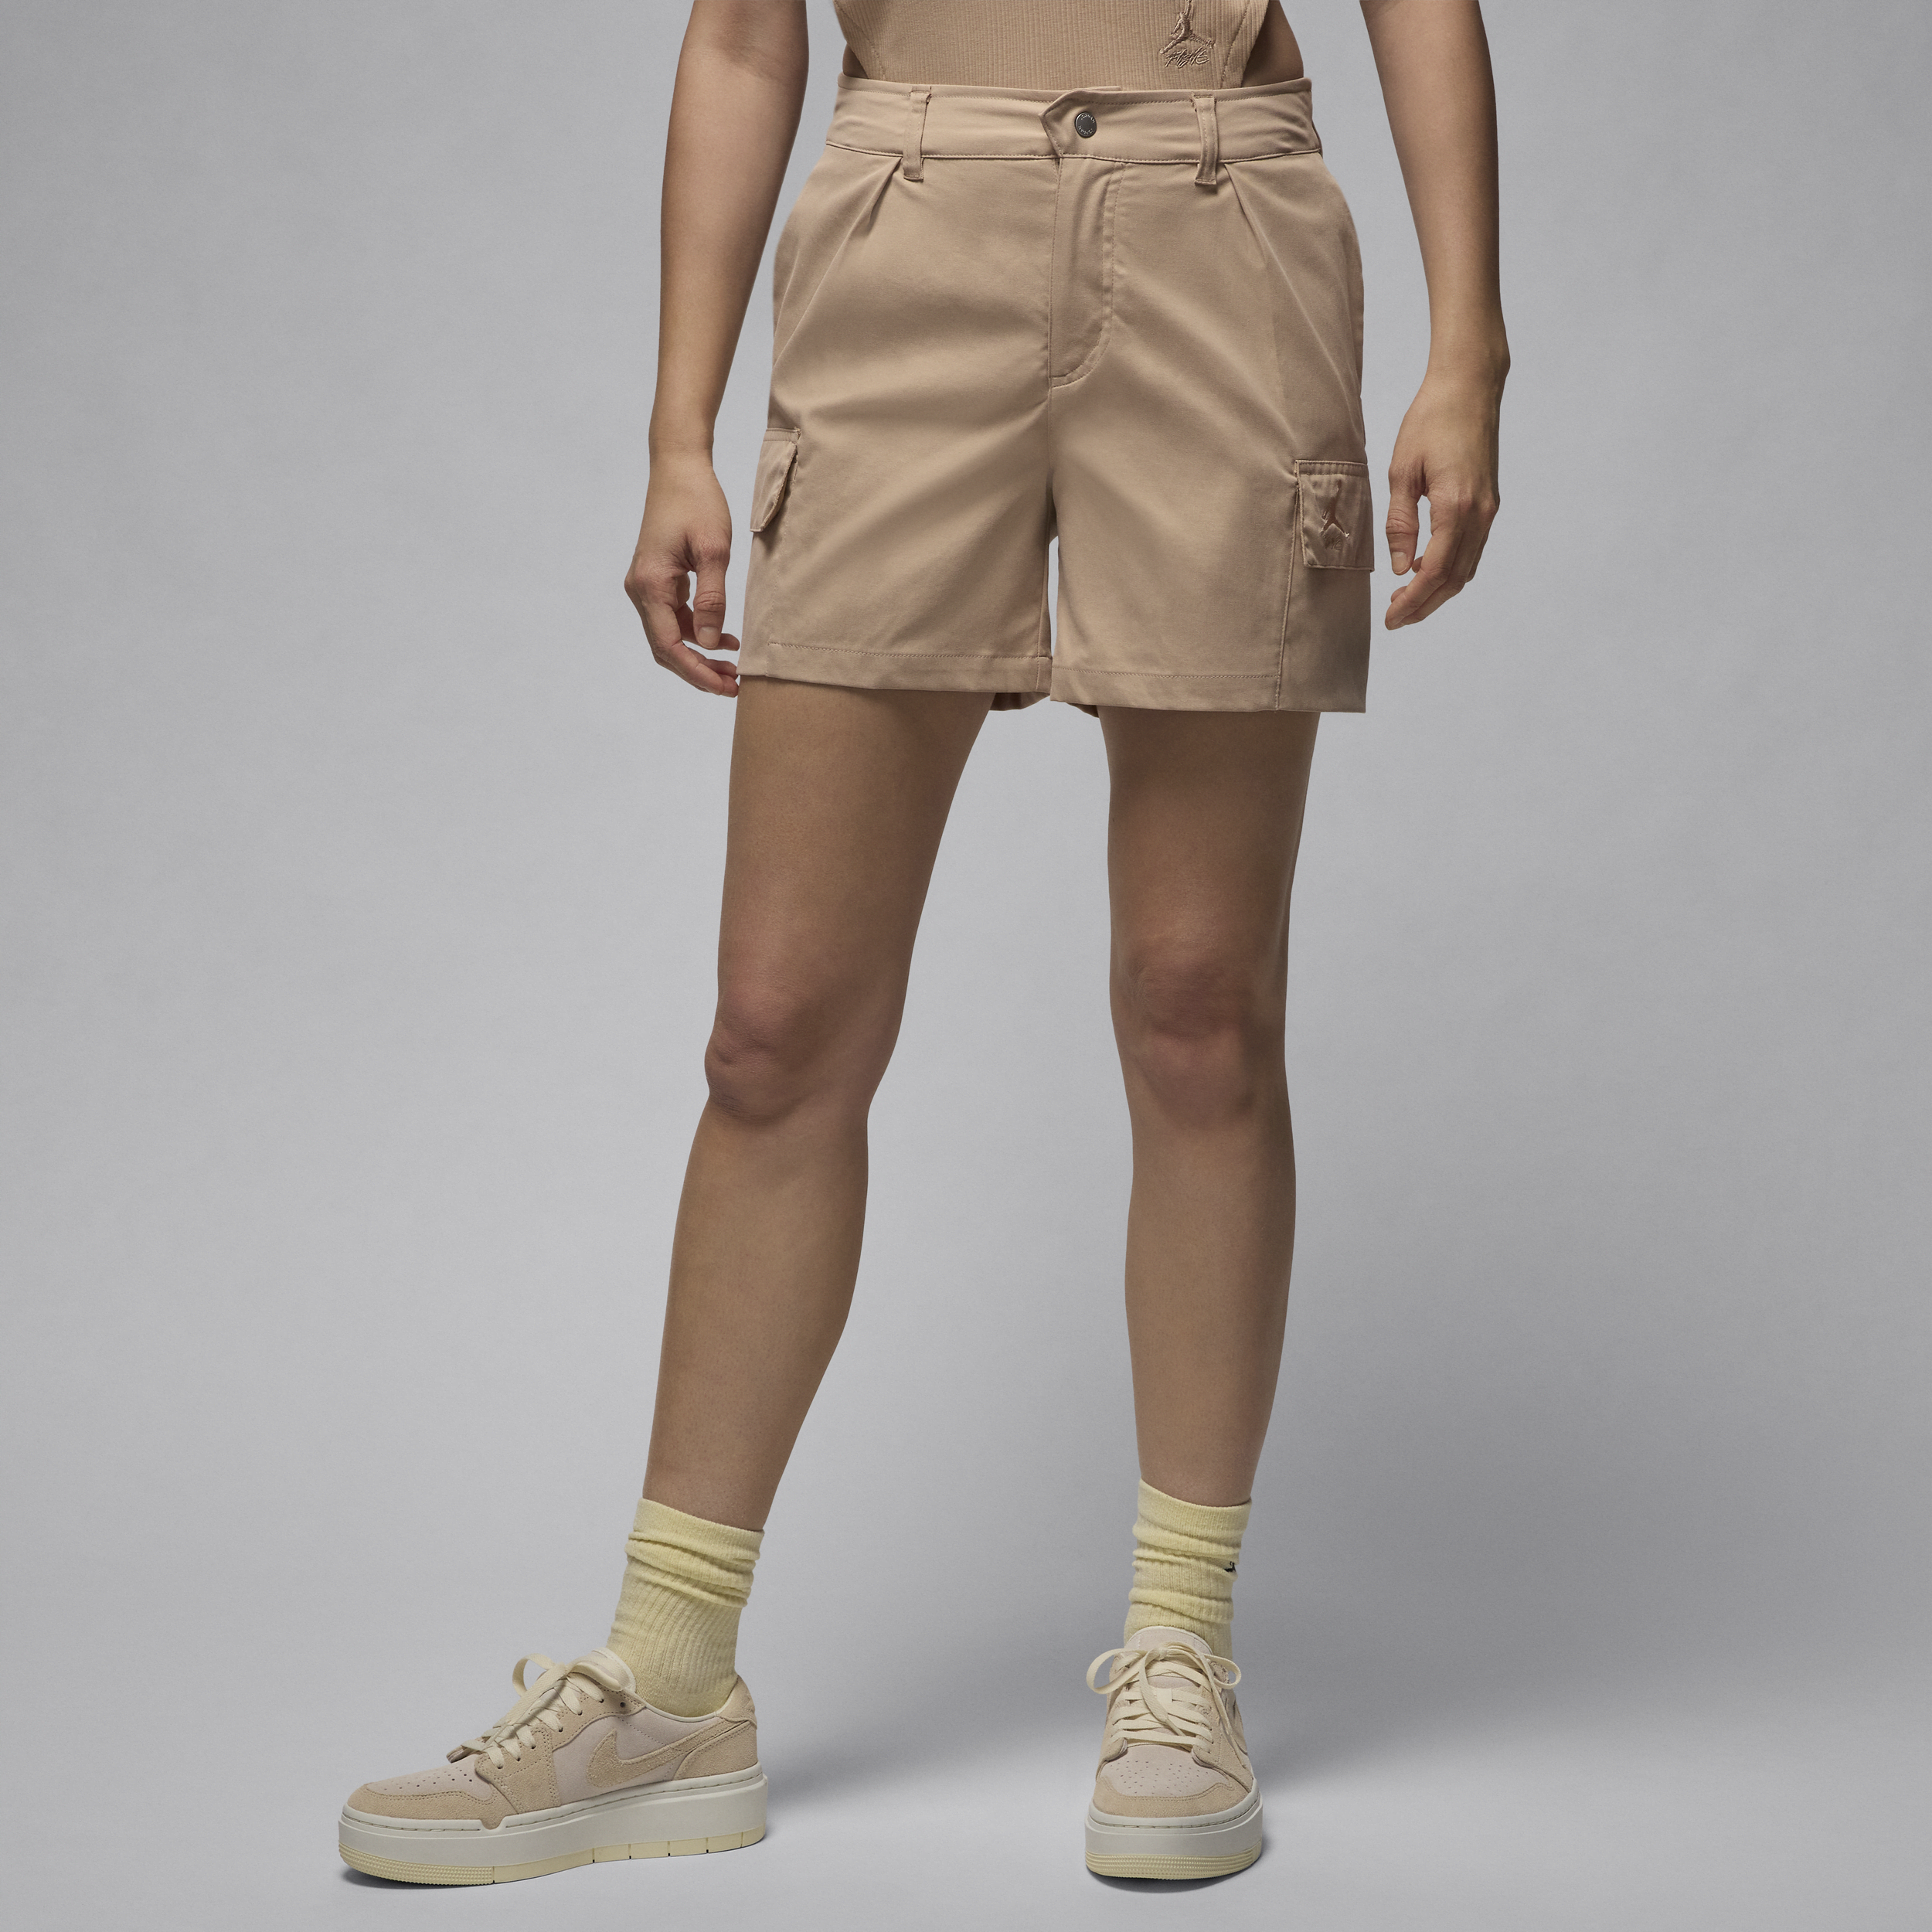 Jordan Chicago Pantalón corto - Mujer - Marrón